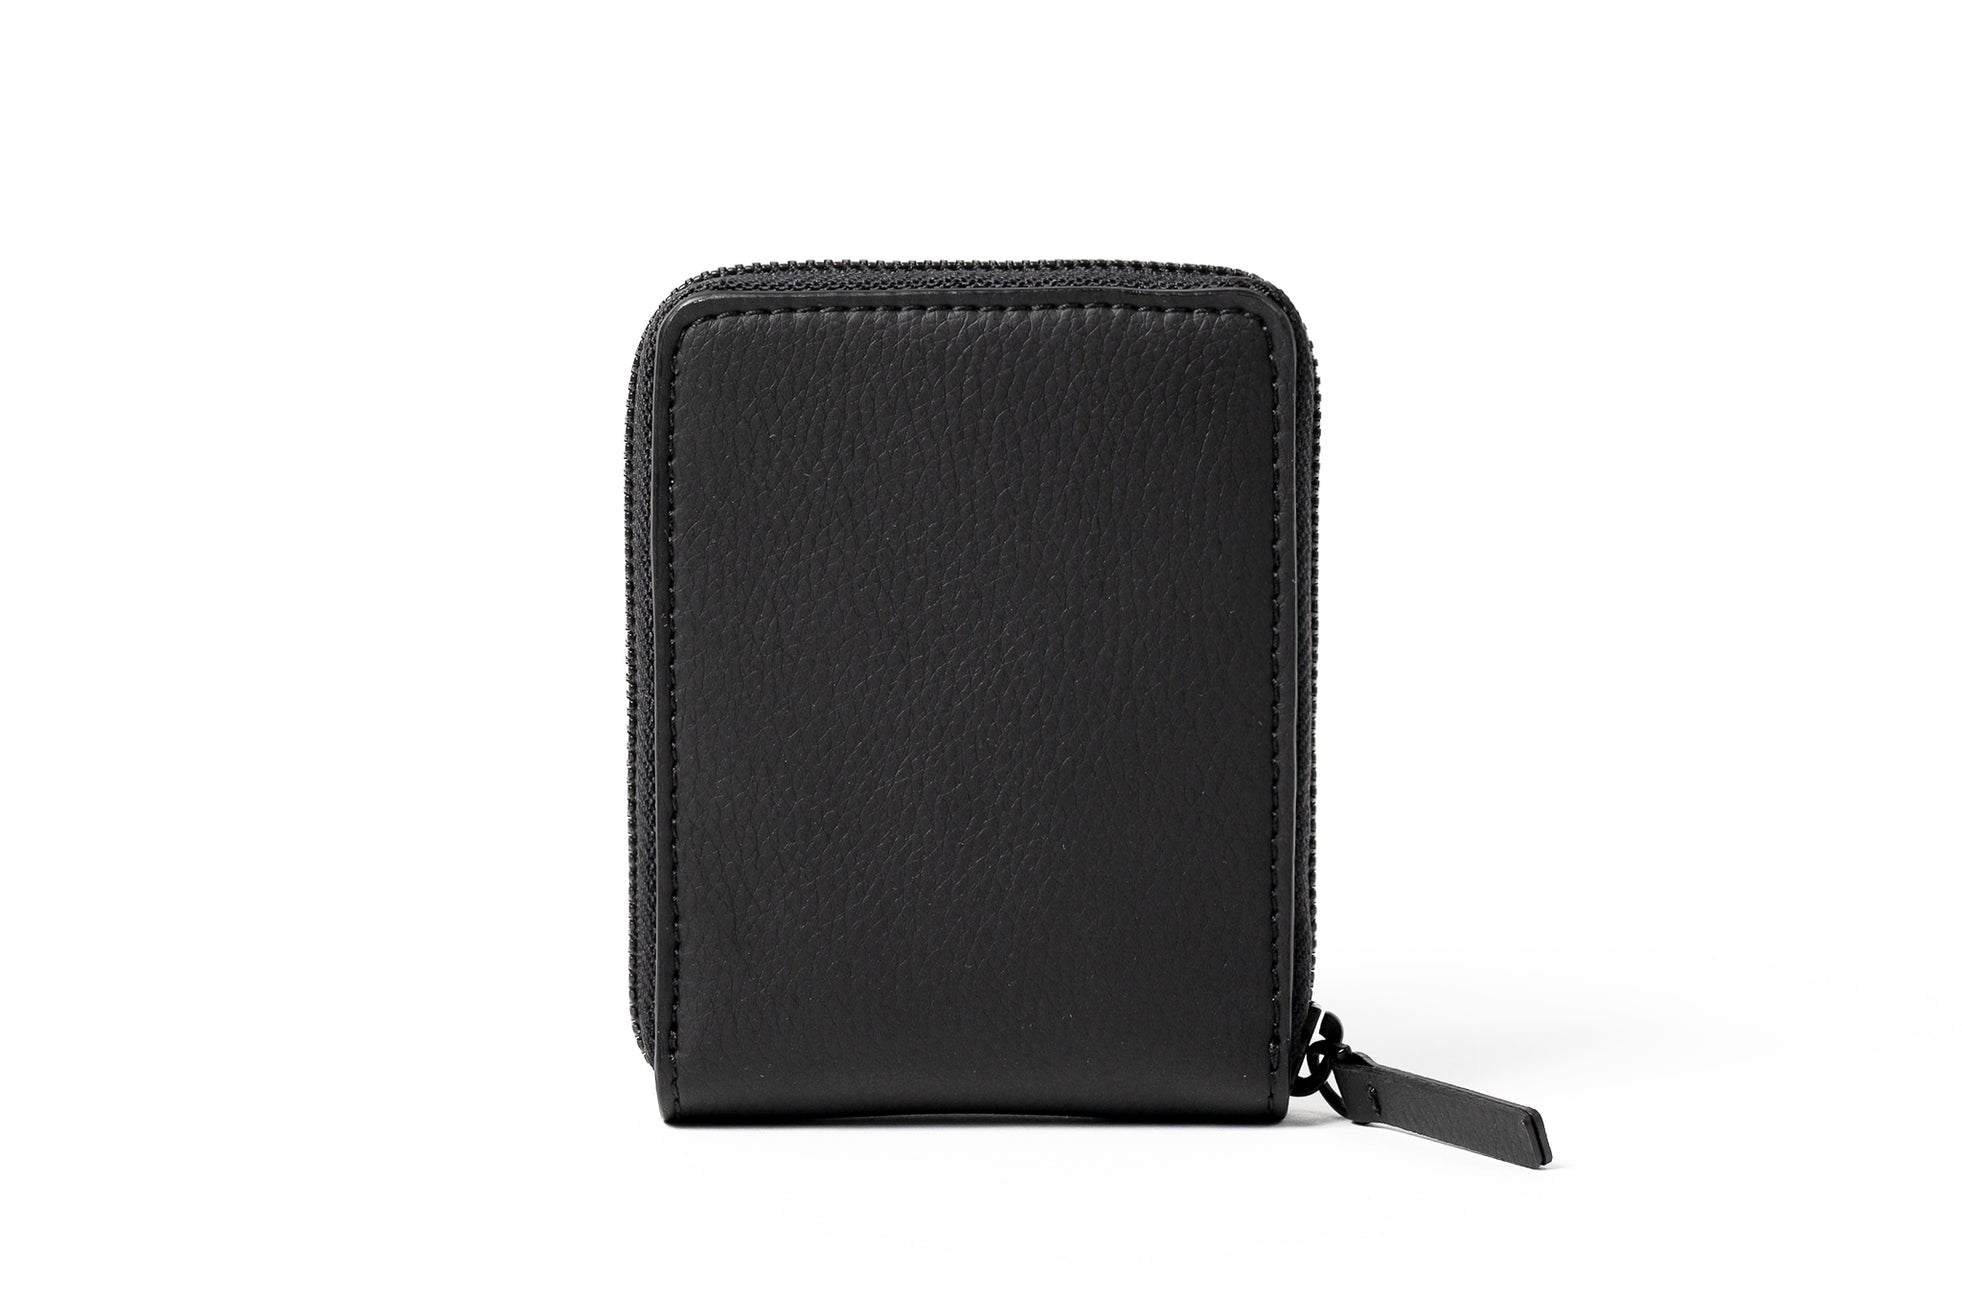 The Zip-Around Wallet - Sample Sale in Technik in Black image 2